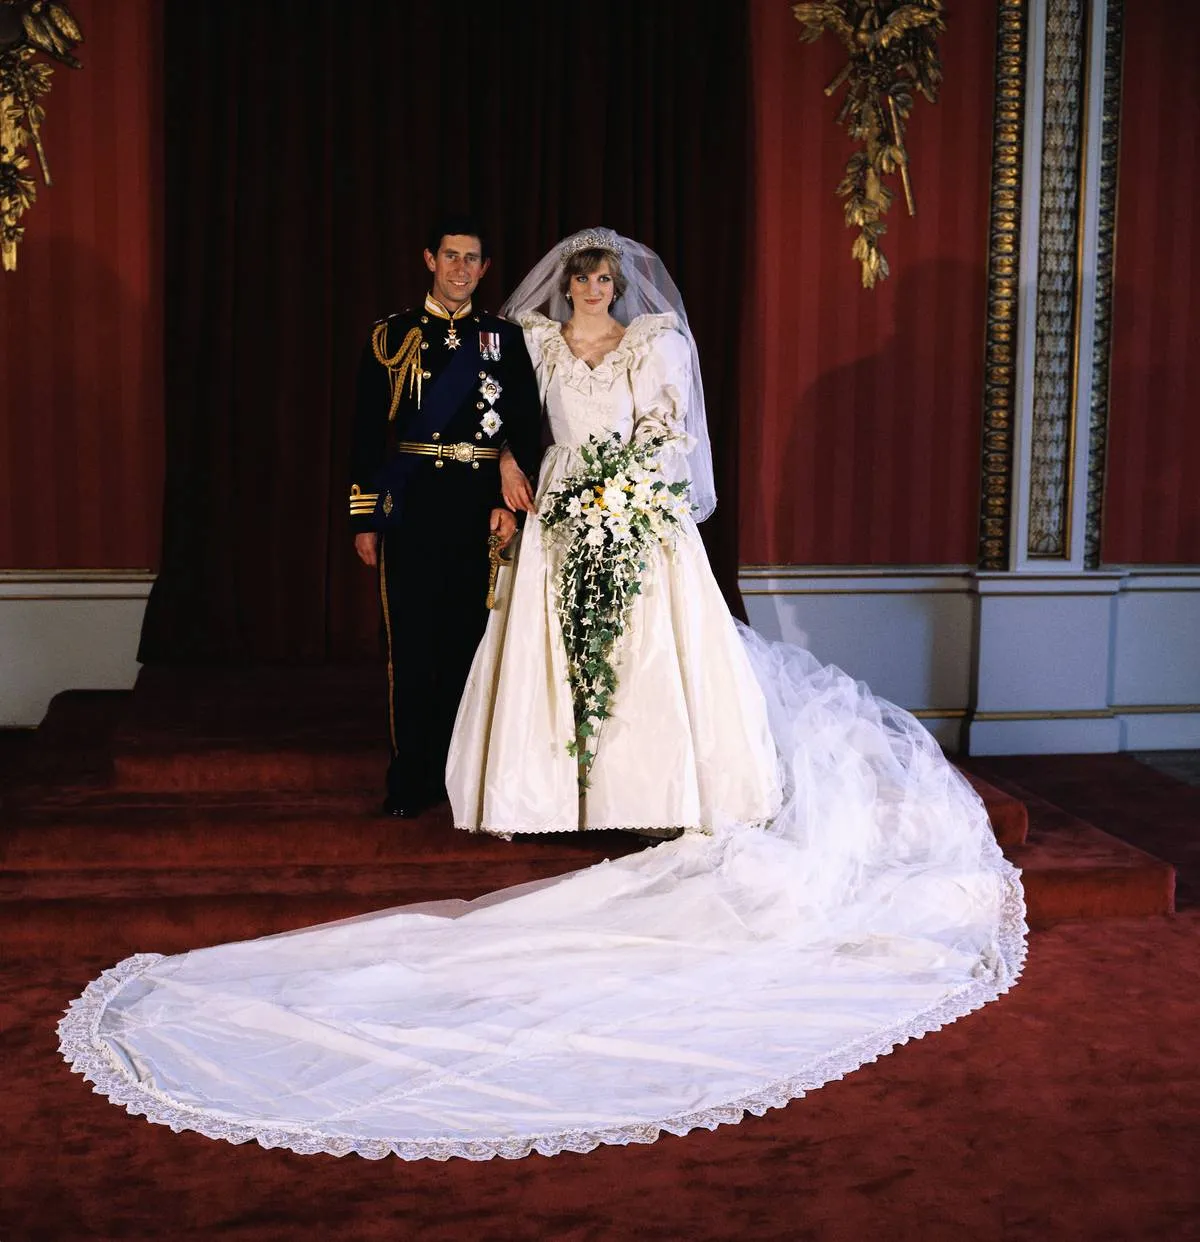 The Royal Wedding Of Charles And Diana - 1981